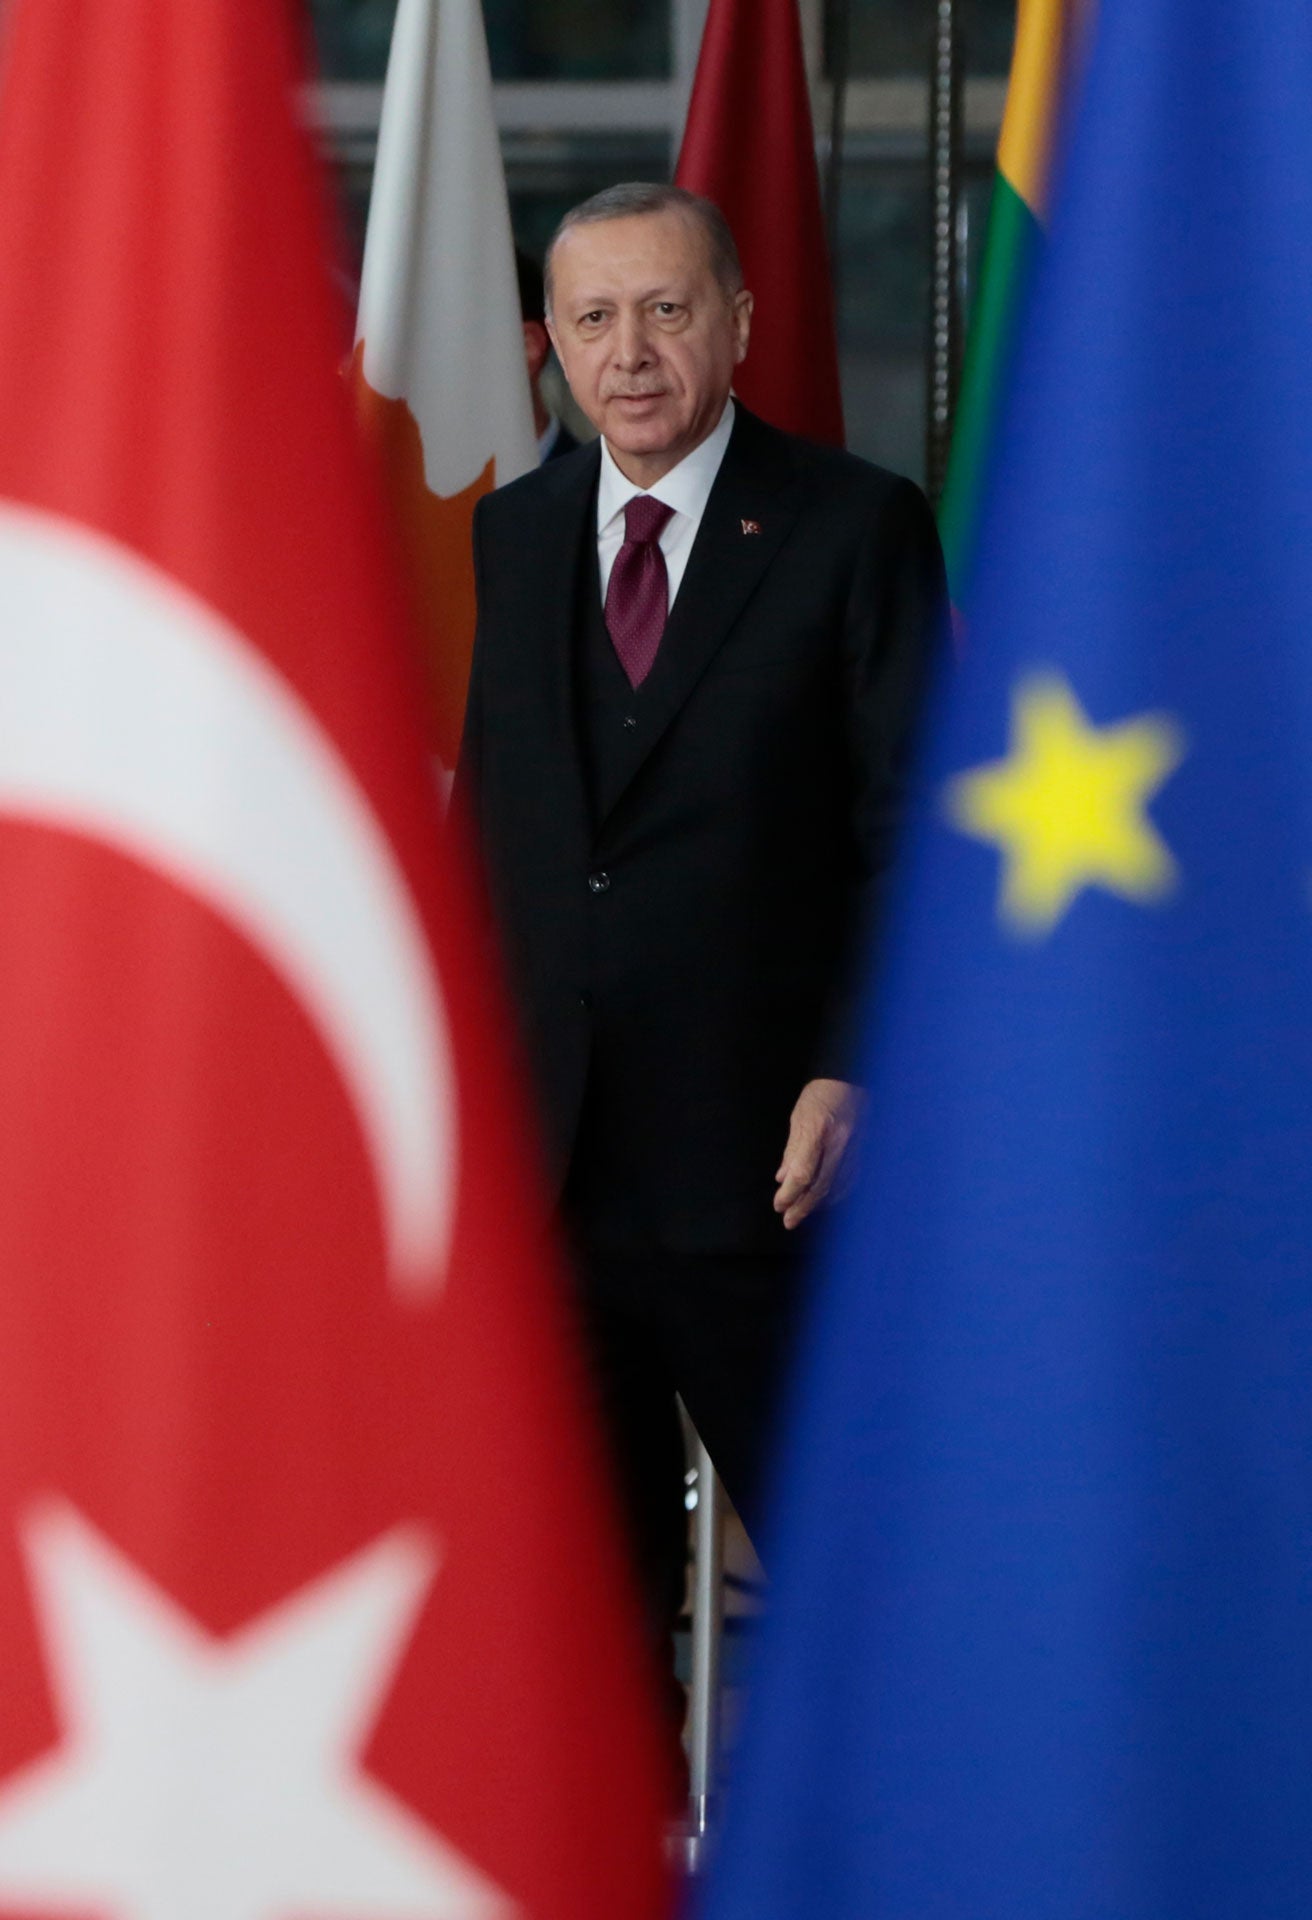 Turkish President Recep Tayyip Erdogan is seen walking near the Turkish and European Union flags.